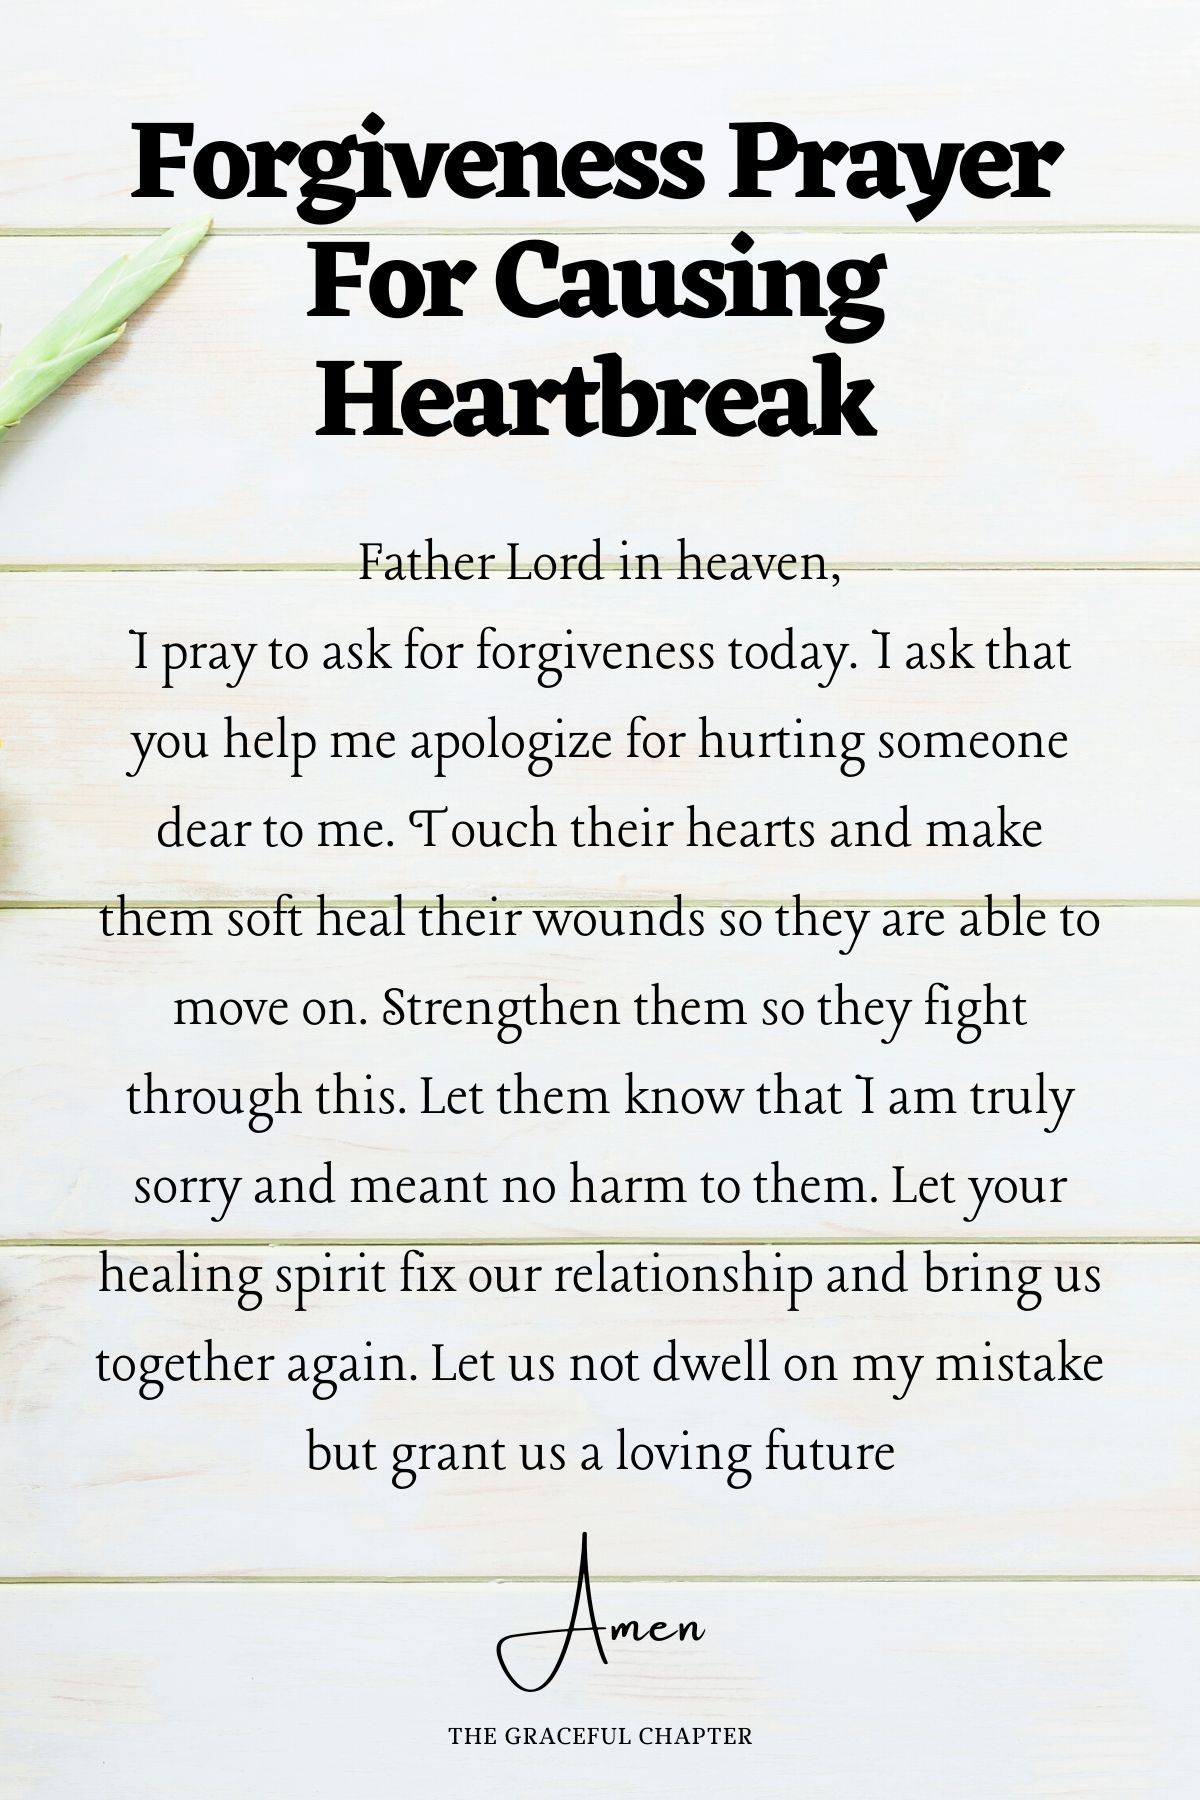 Forgiveness prayer for causing heartbreak